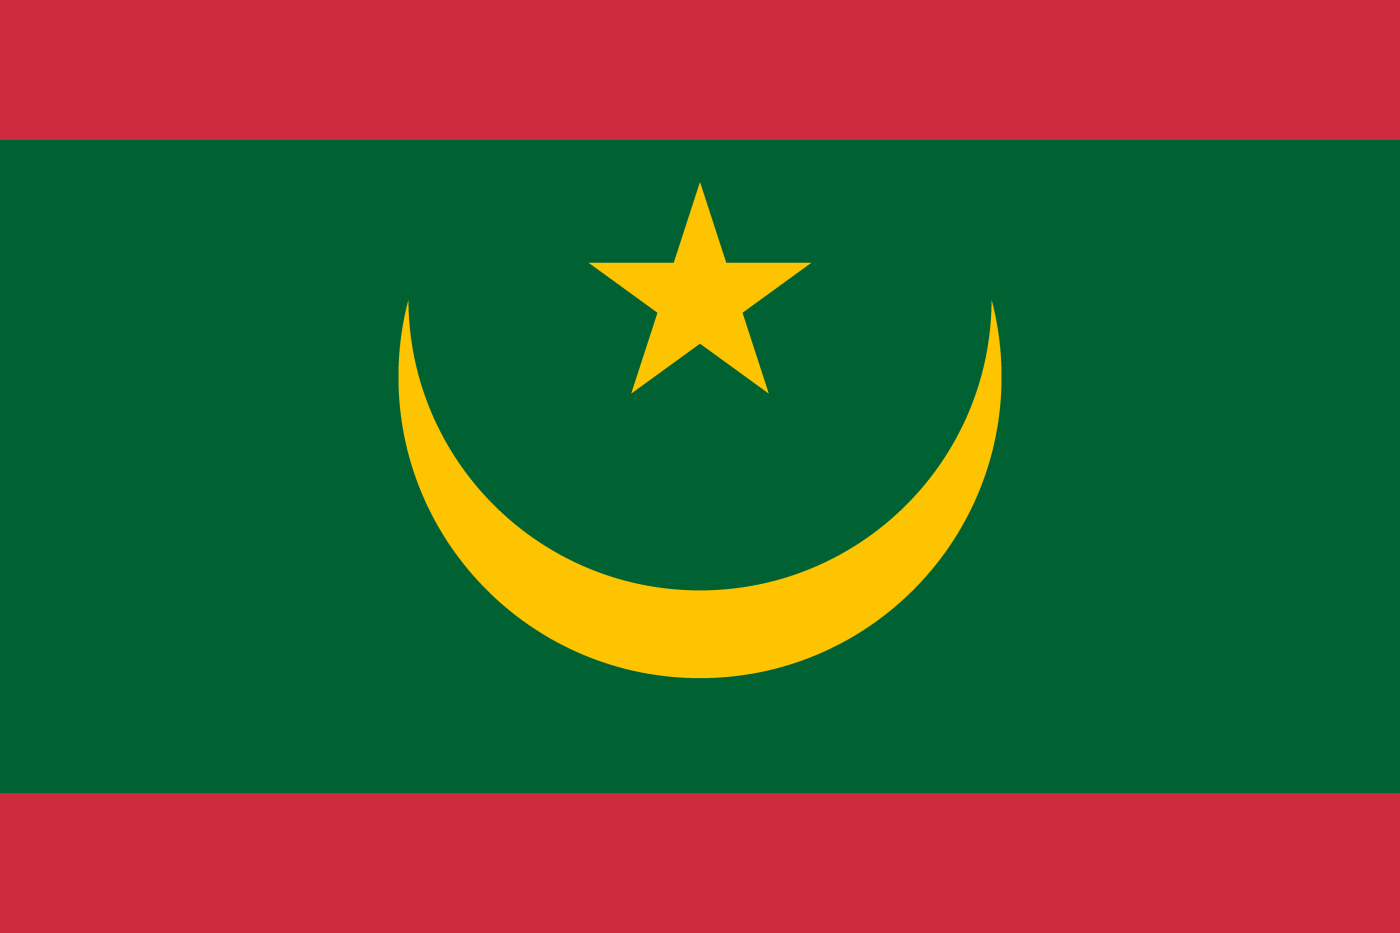 Mauritania independence day